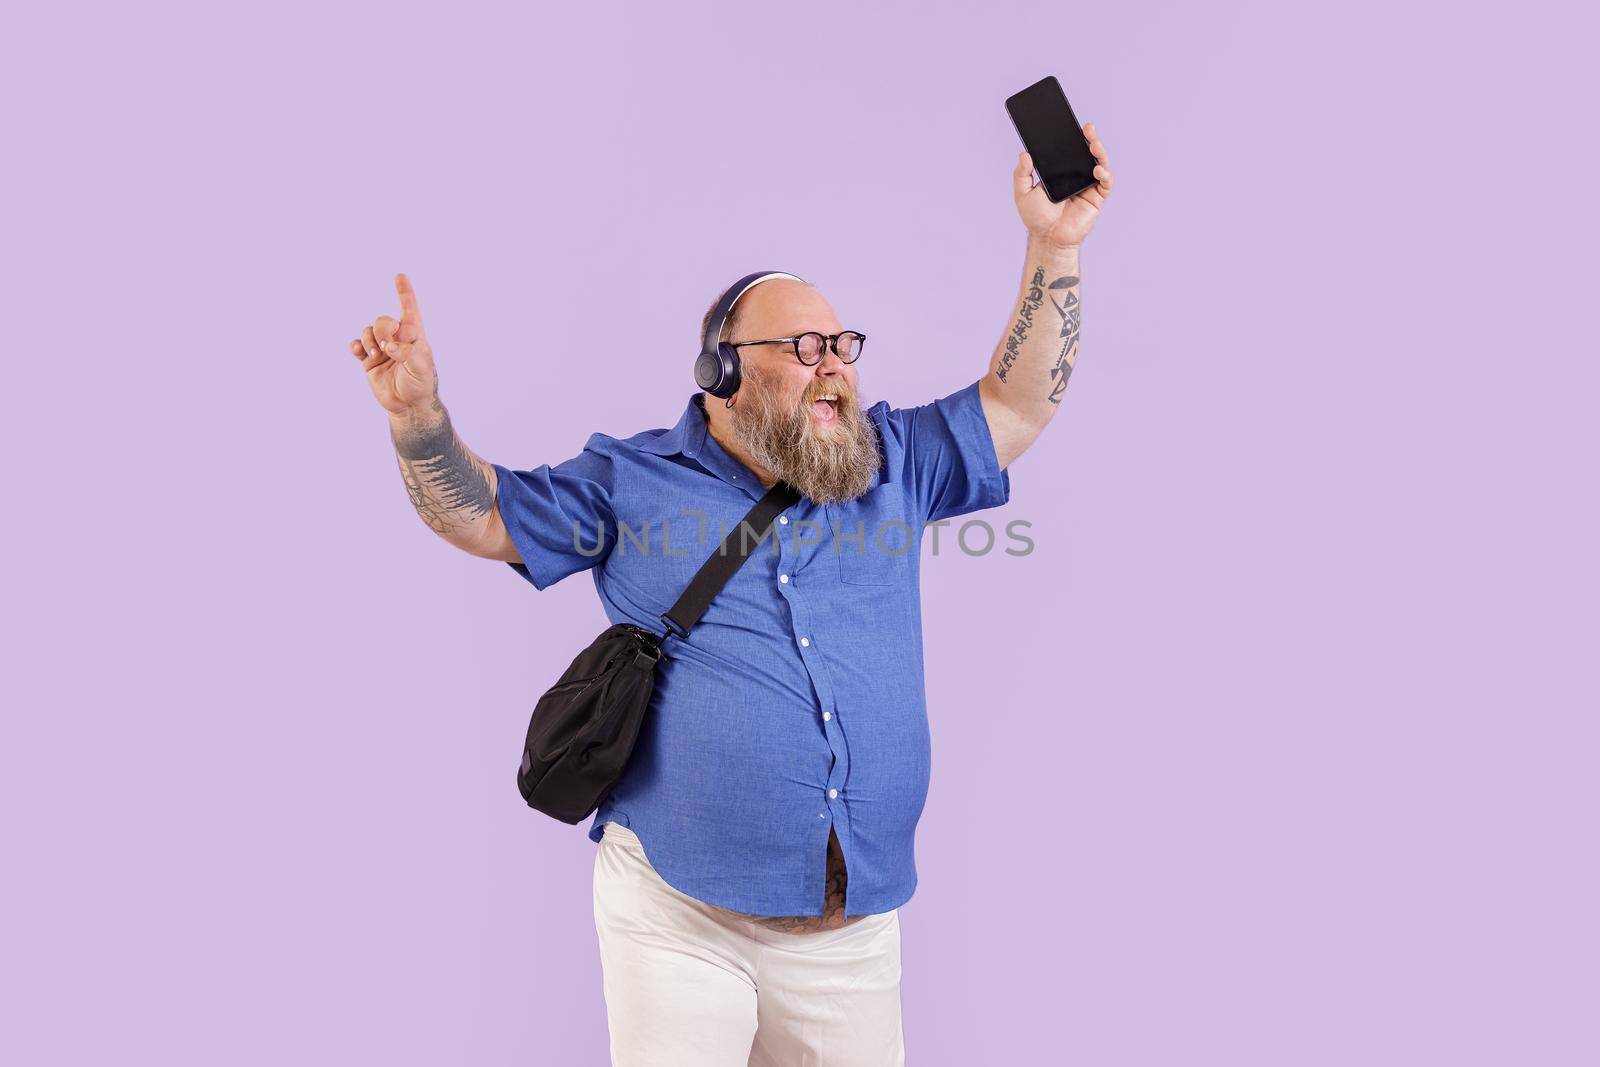 Plus size man with headphones enjoys music on mobile phone on purple background by Yaroslav_astakhov